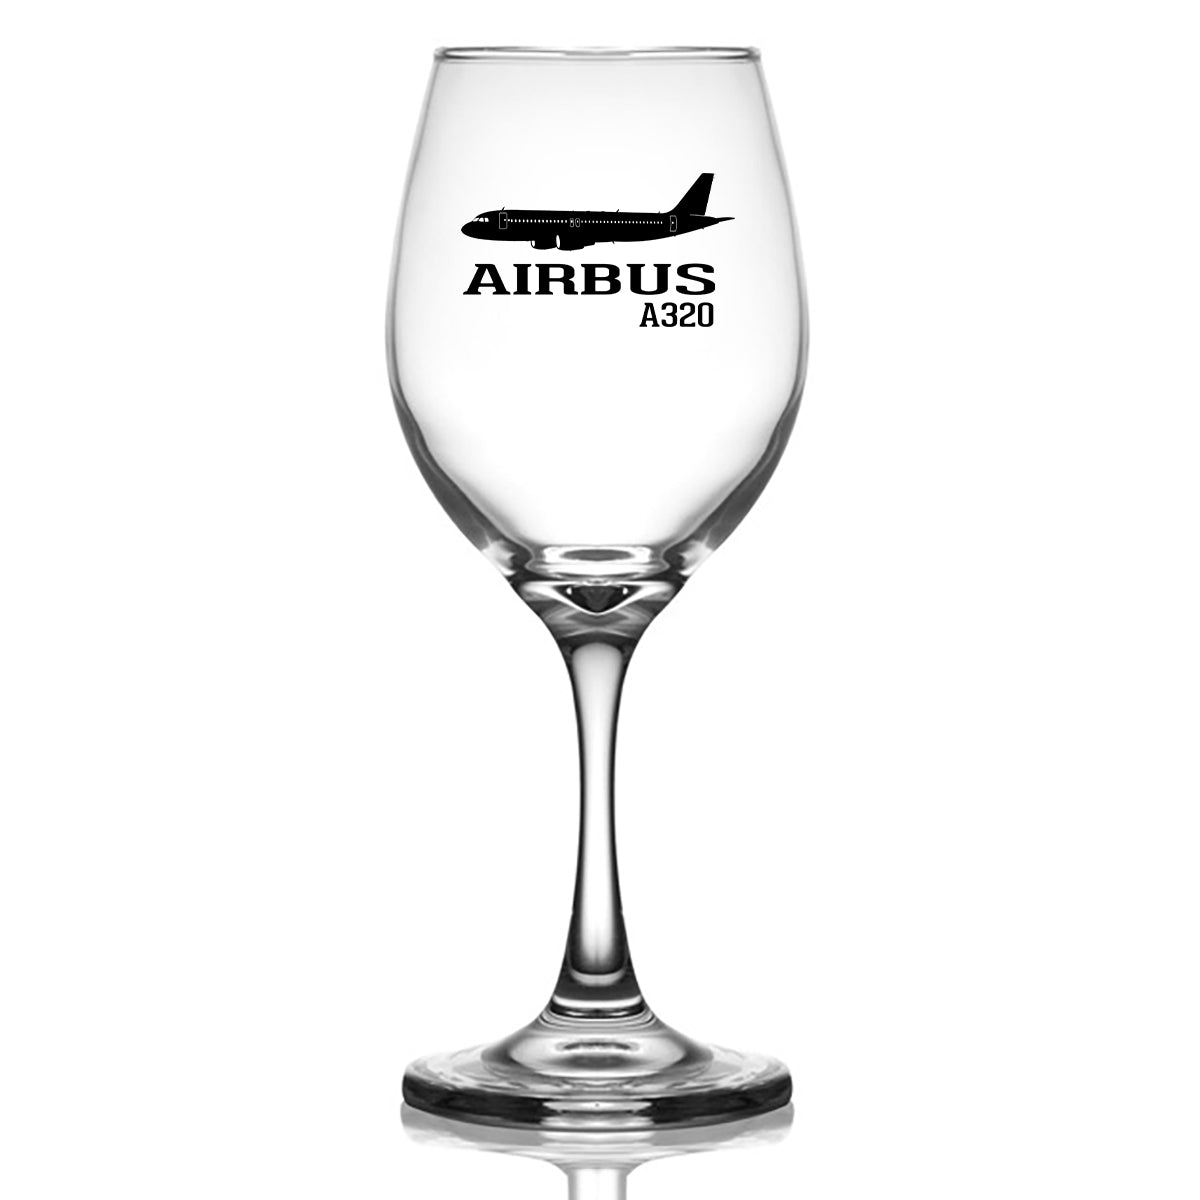 Airbus A320 Printed Designed Wine Glasses